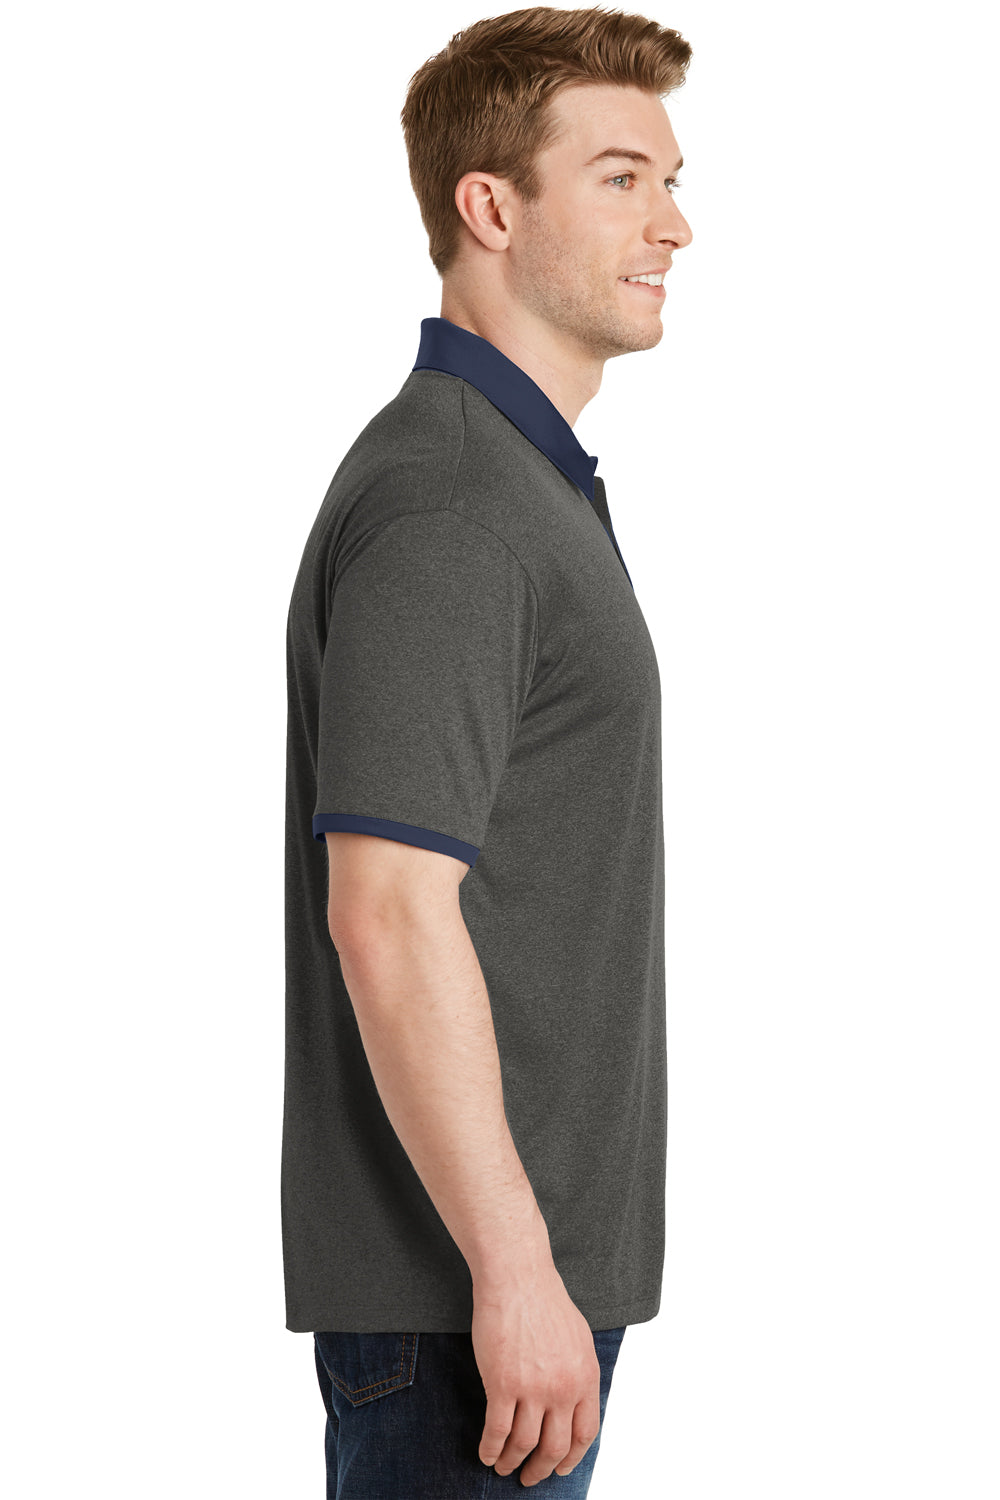 Sport-Tek ST667 Mens Heather Contender Moisture Wicking Short Sleeve Polo Shirt Graphite Grey/Navy Blue Side